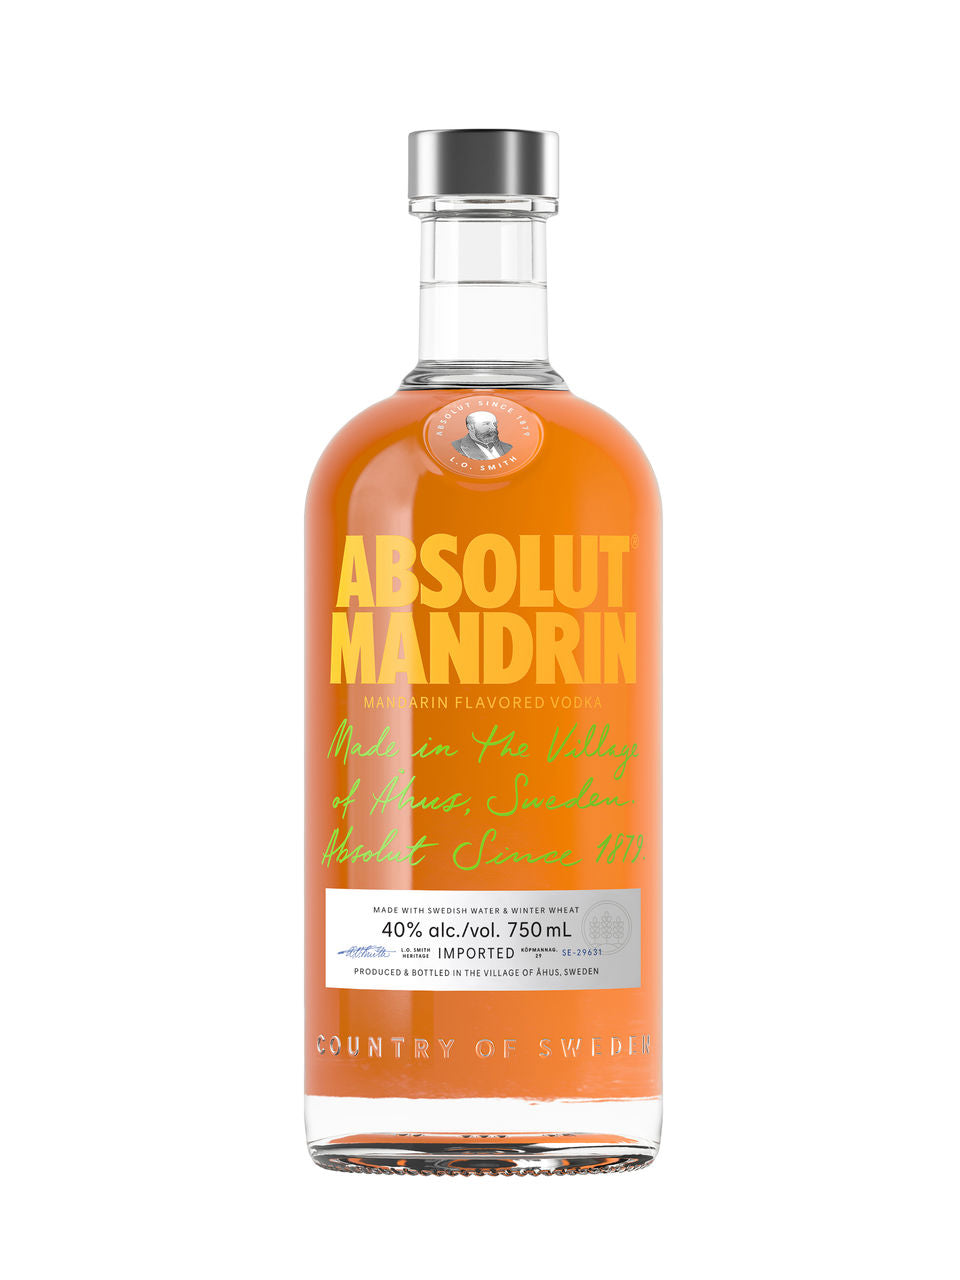 Absolut Mandrin Vodka  750 mL bottle